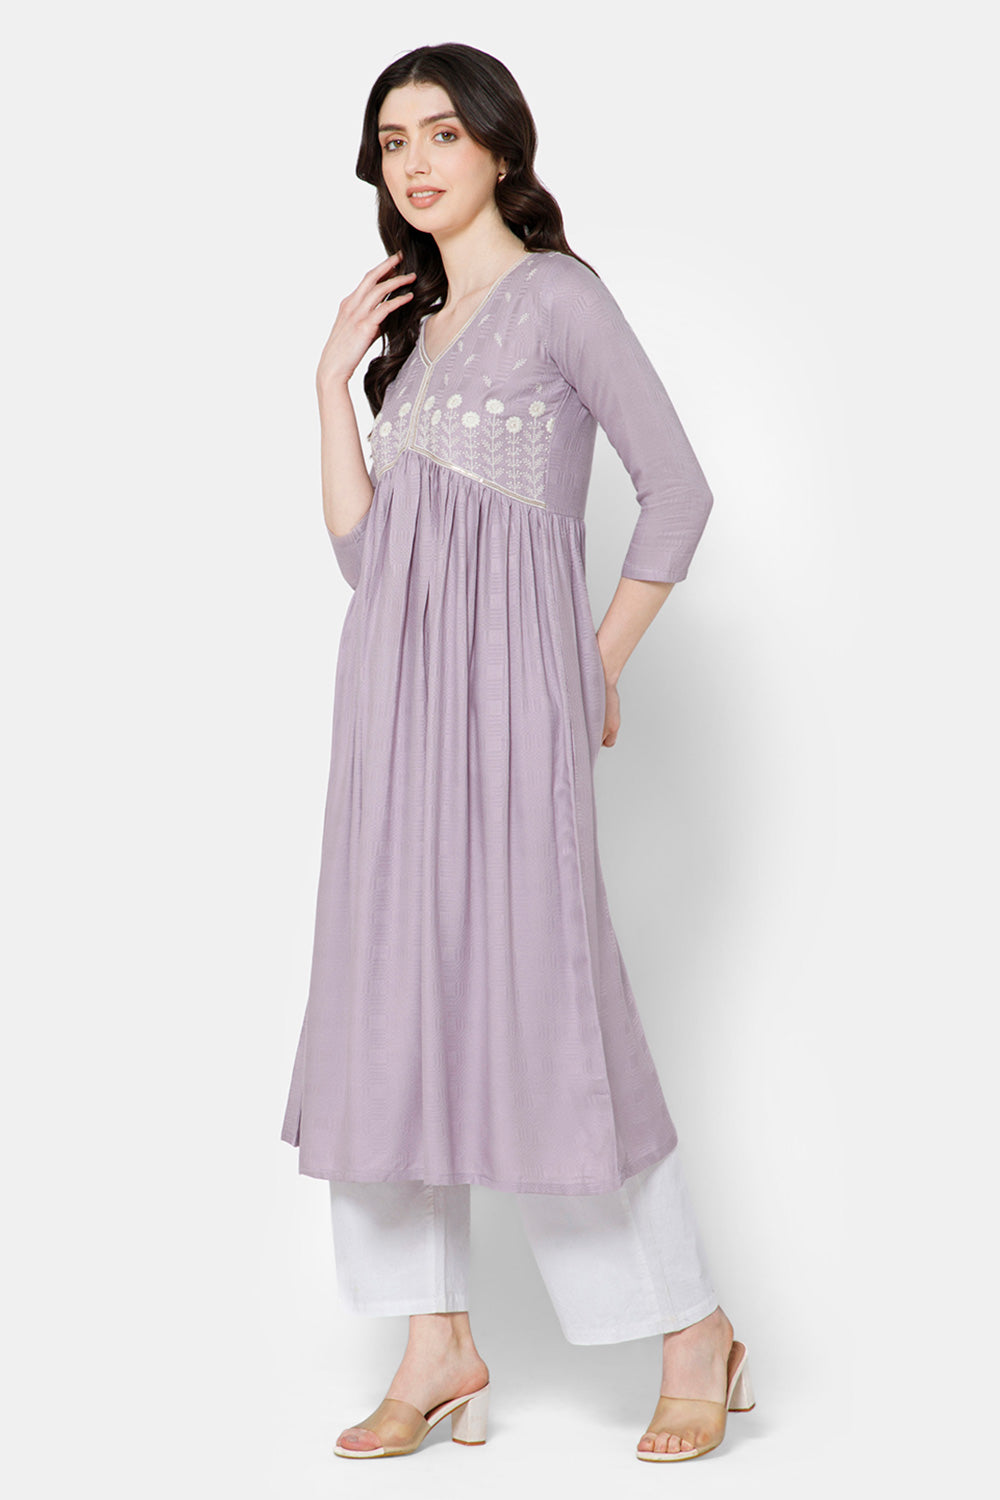 Mythri Women's Ethnic wear Kurthi with Elegant Lace Attachement At The Neckline - Purple - E079